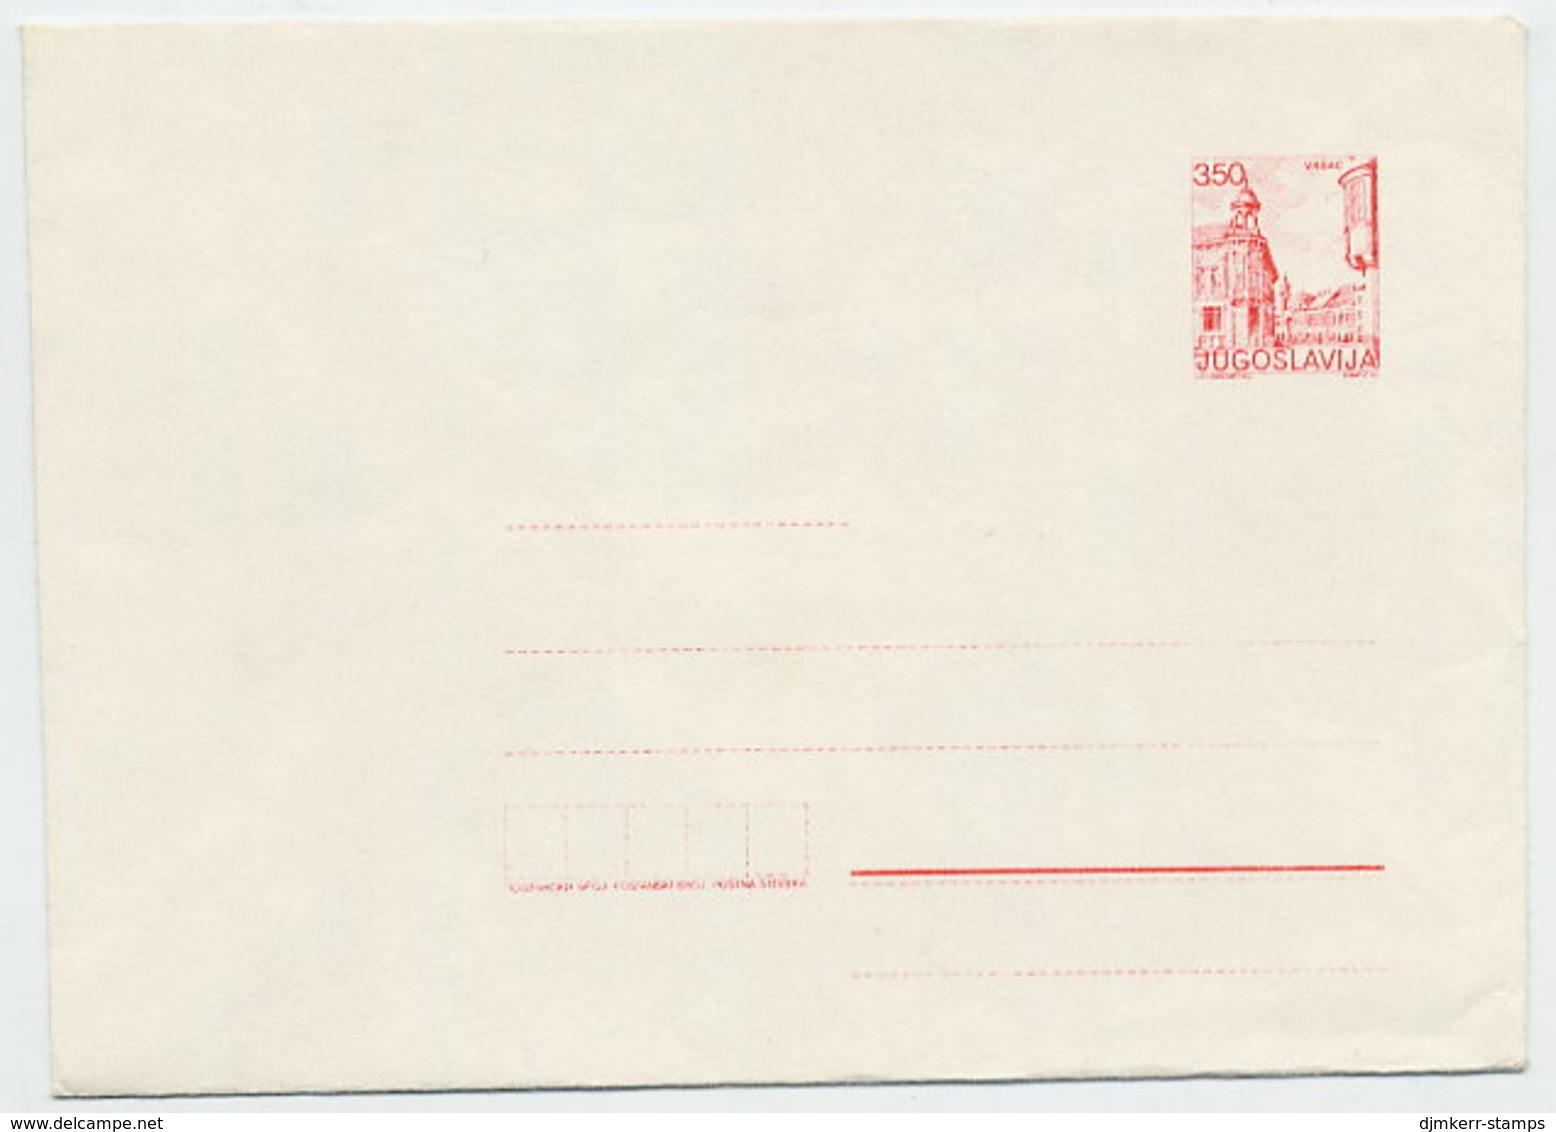 YUGOSLAVIA 1981 Tourism 3.50 D. Envelope, Unused. Michel U63 - Entiers Postaux